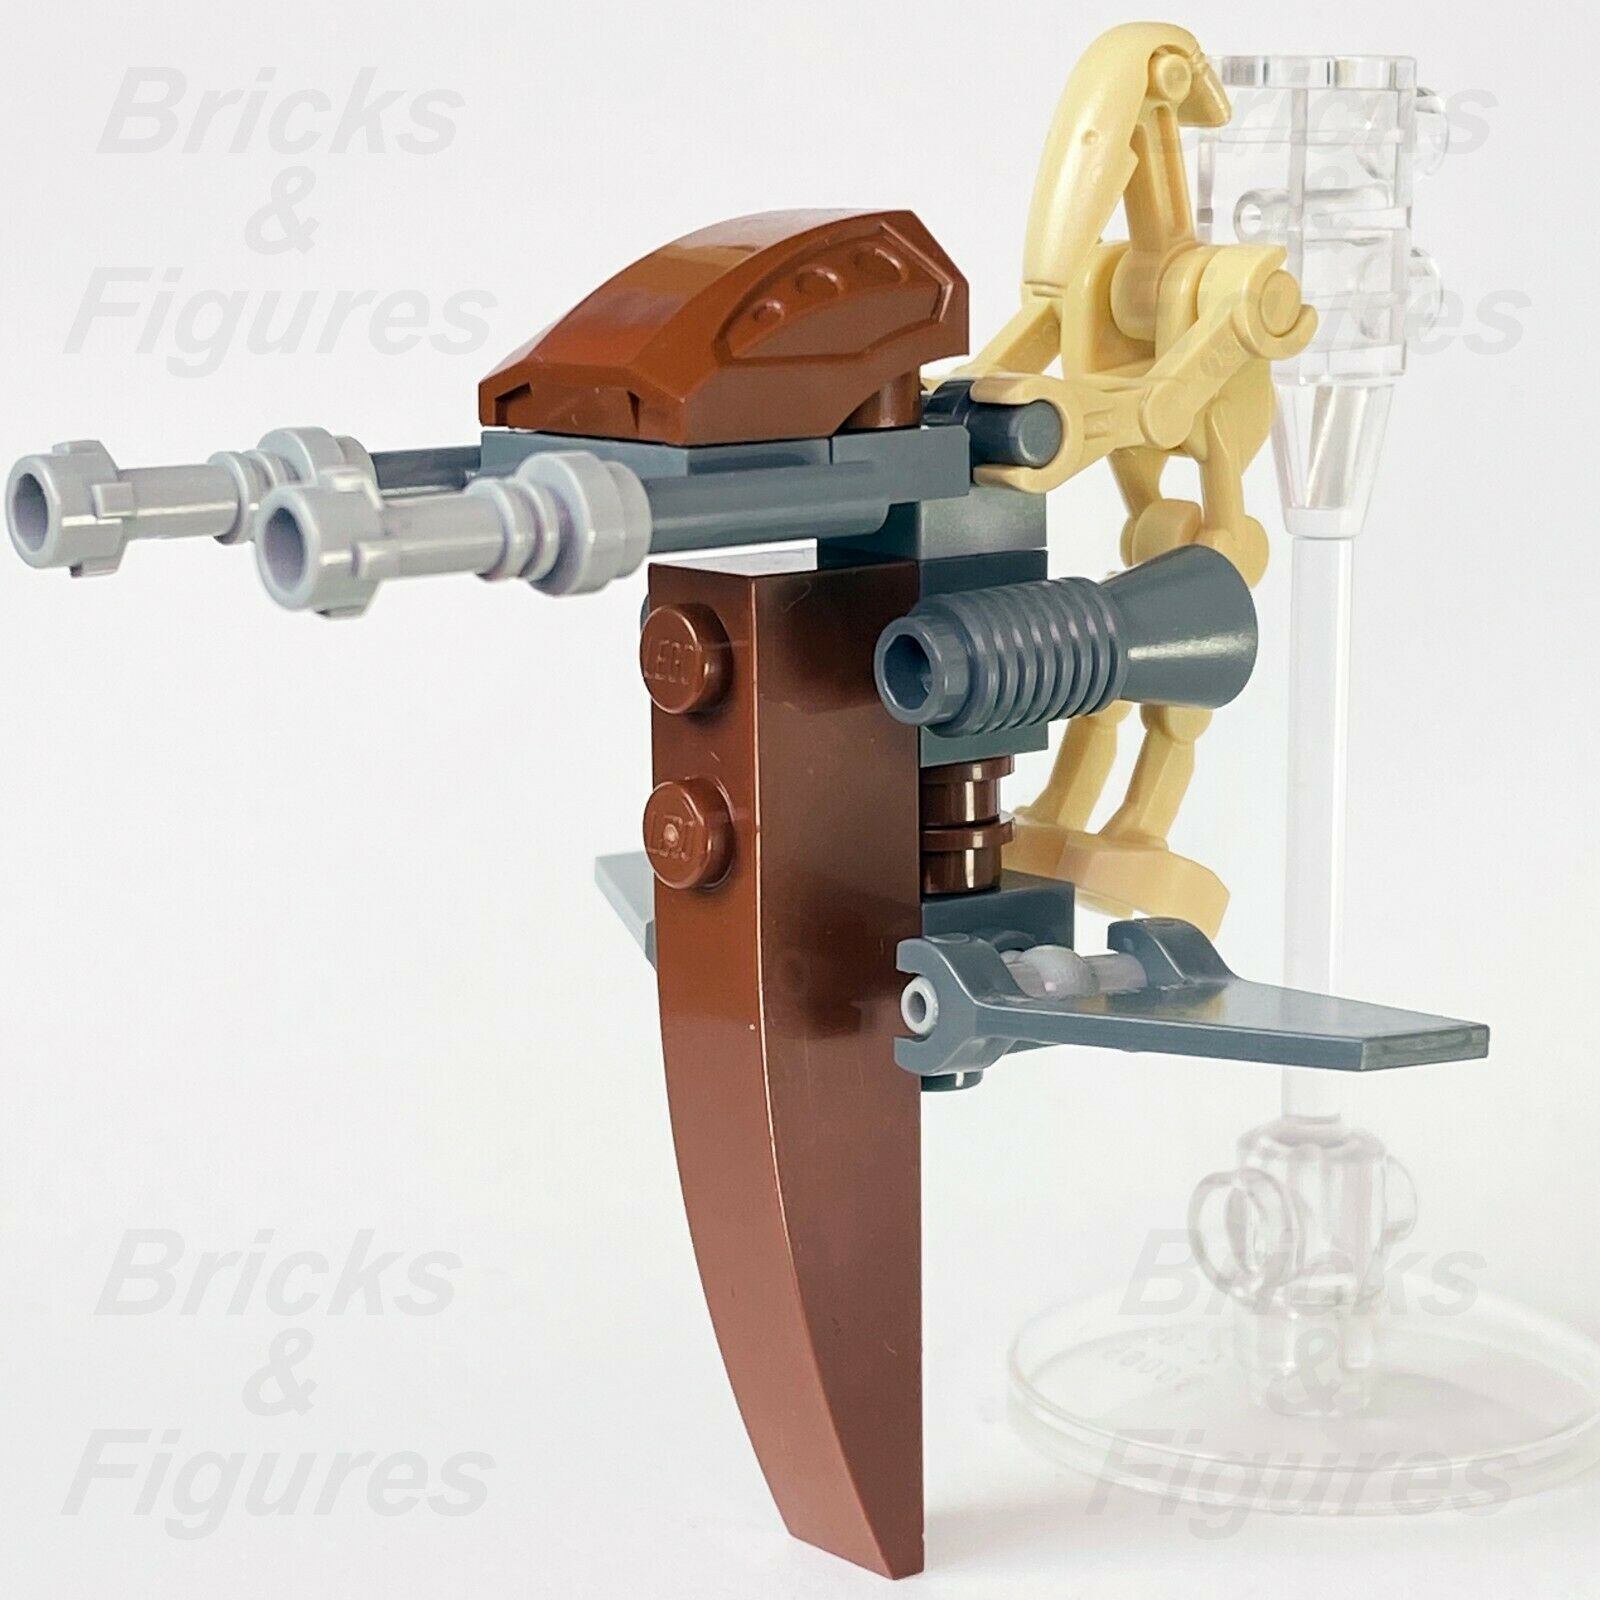 New Star Wars LEGO® STAP Repulsorcraft Set with Battle Droid Minifigure 30058 - Bricks & Figures